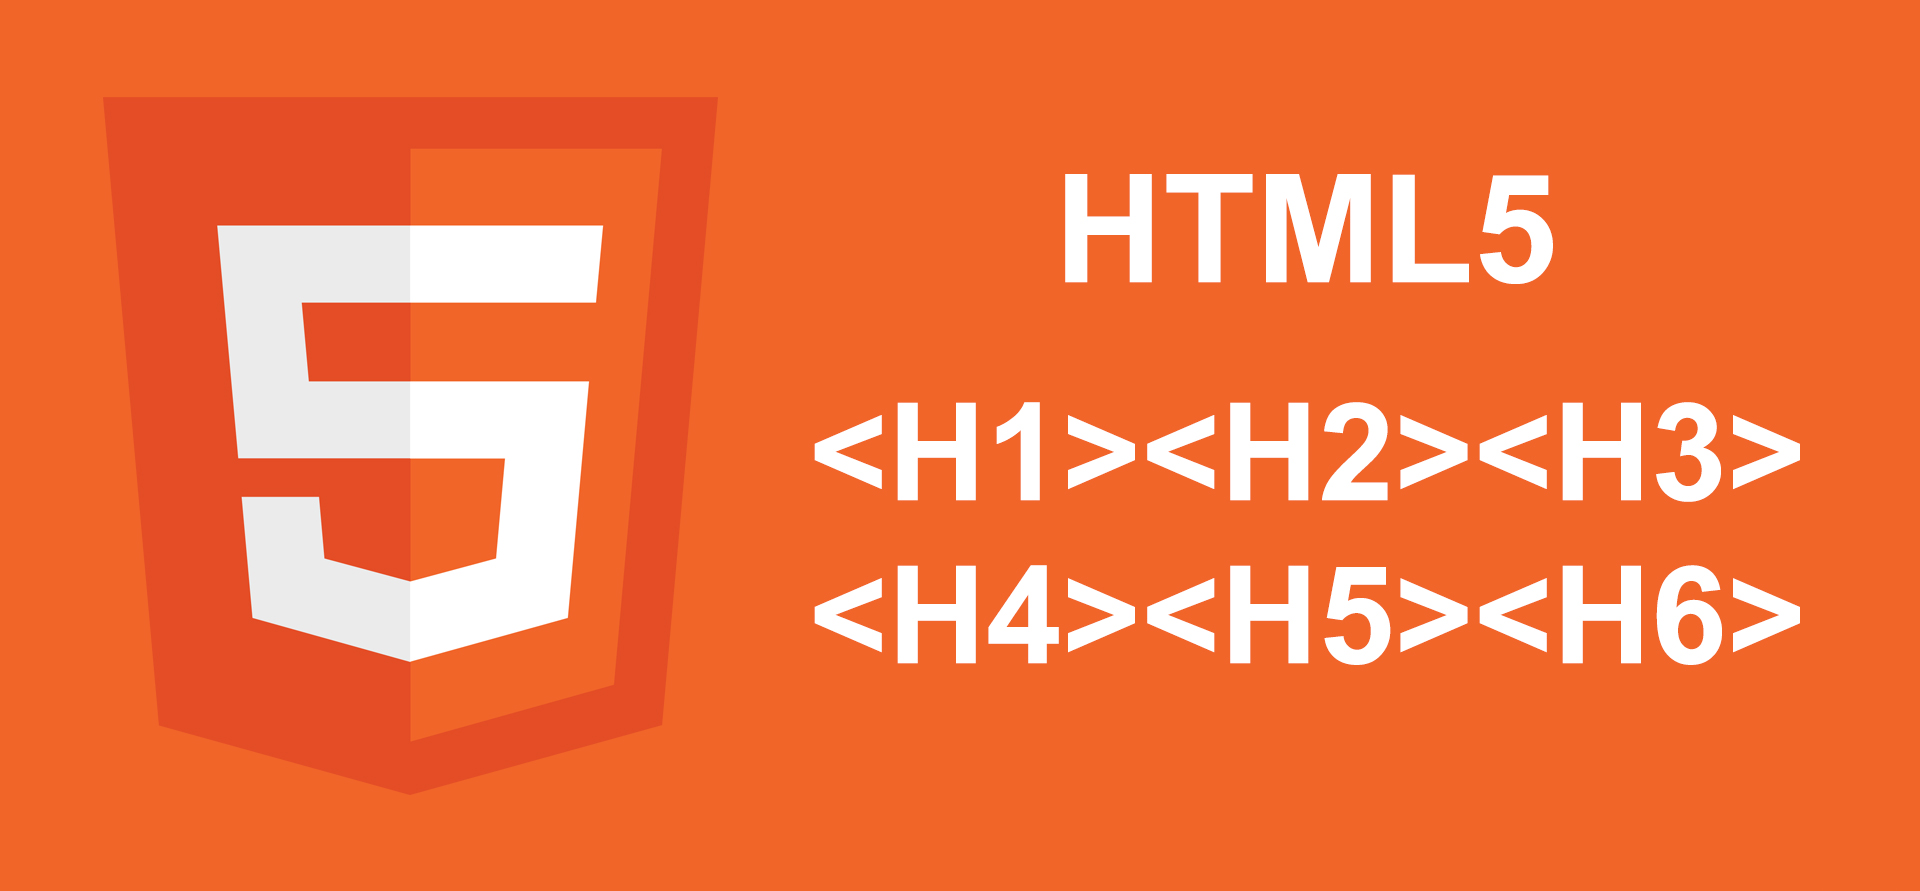 Tutorial HTML5 - Elemen <h1>, <h2>, <h3>, <h4>, <h5>, <h6> image